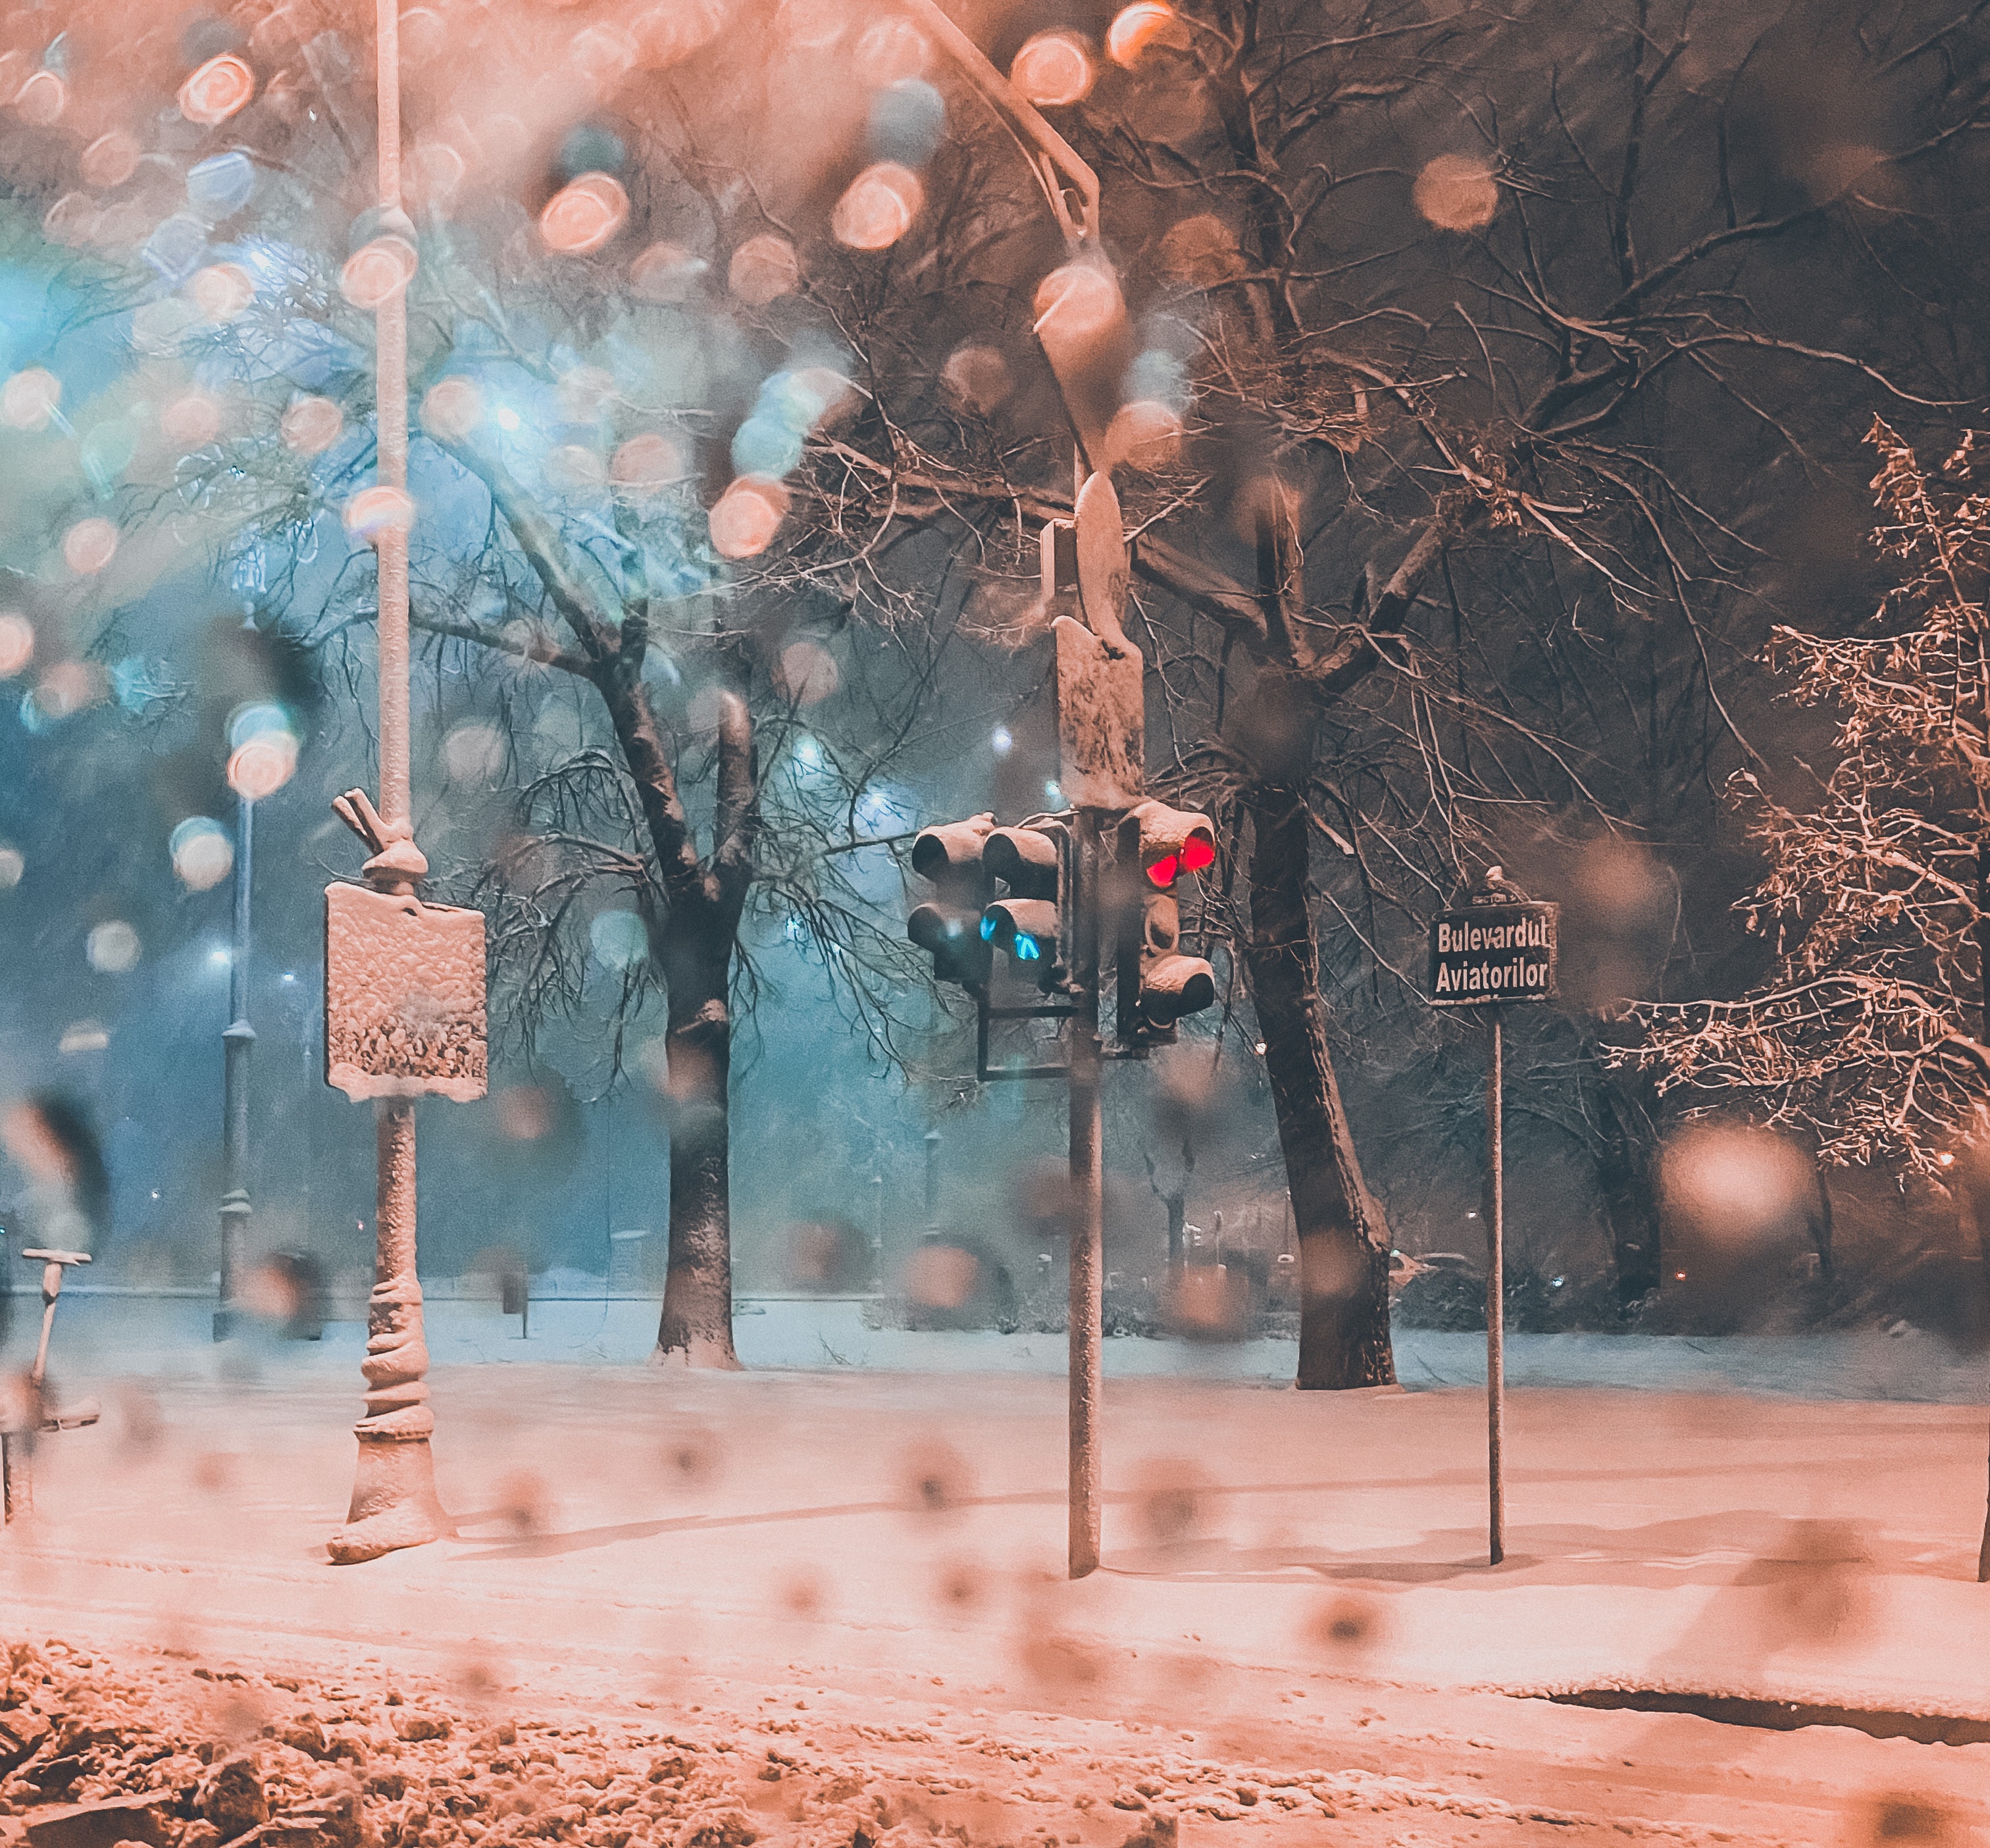 traffic light, winter, snow, miscellanea, miscellaneous, street, snowstorm